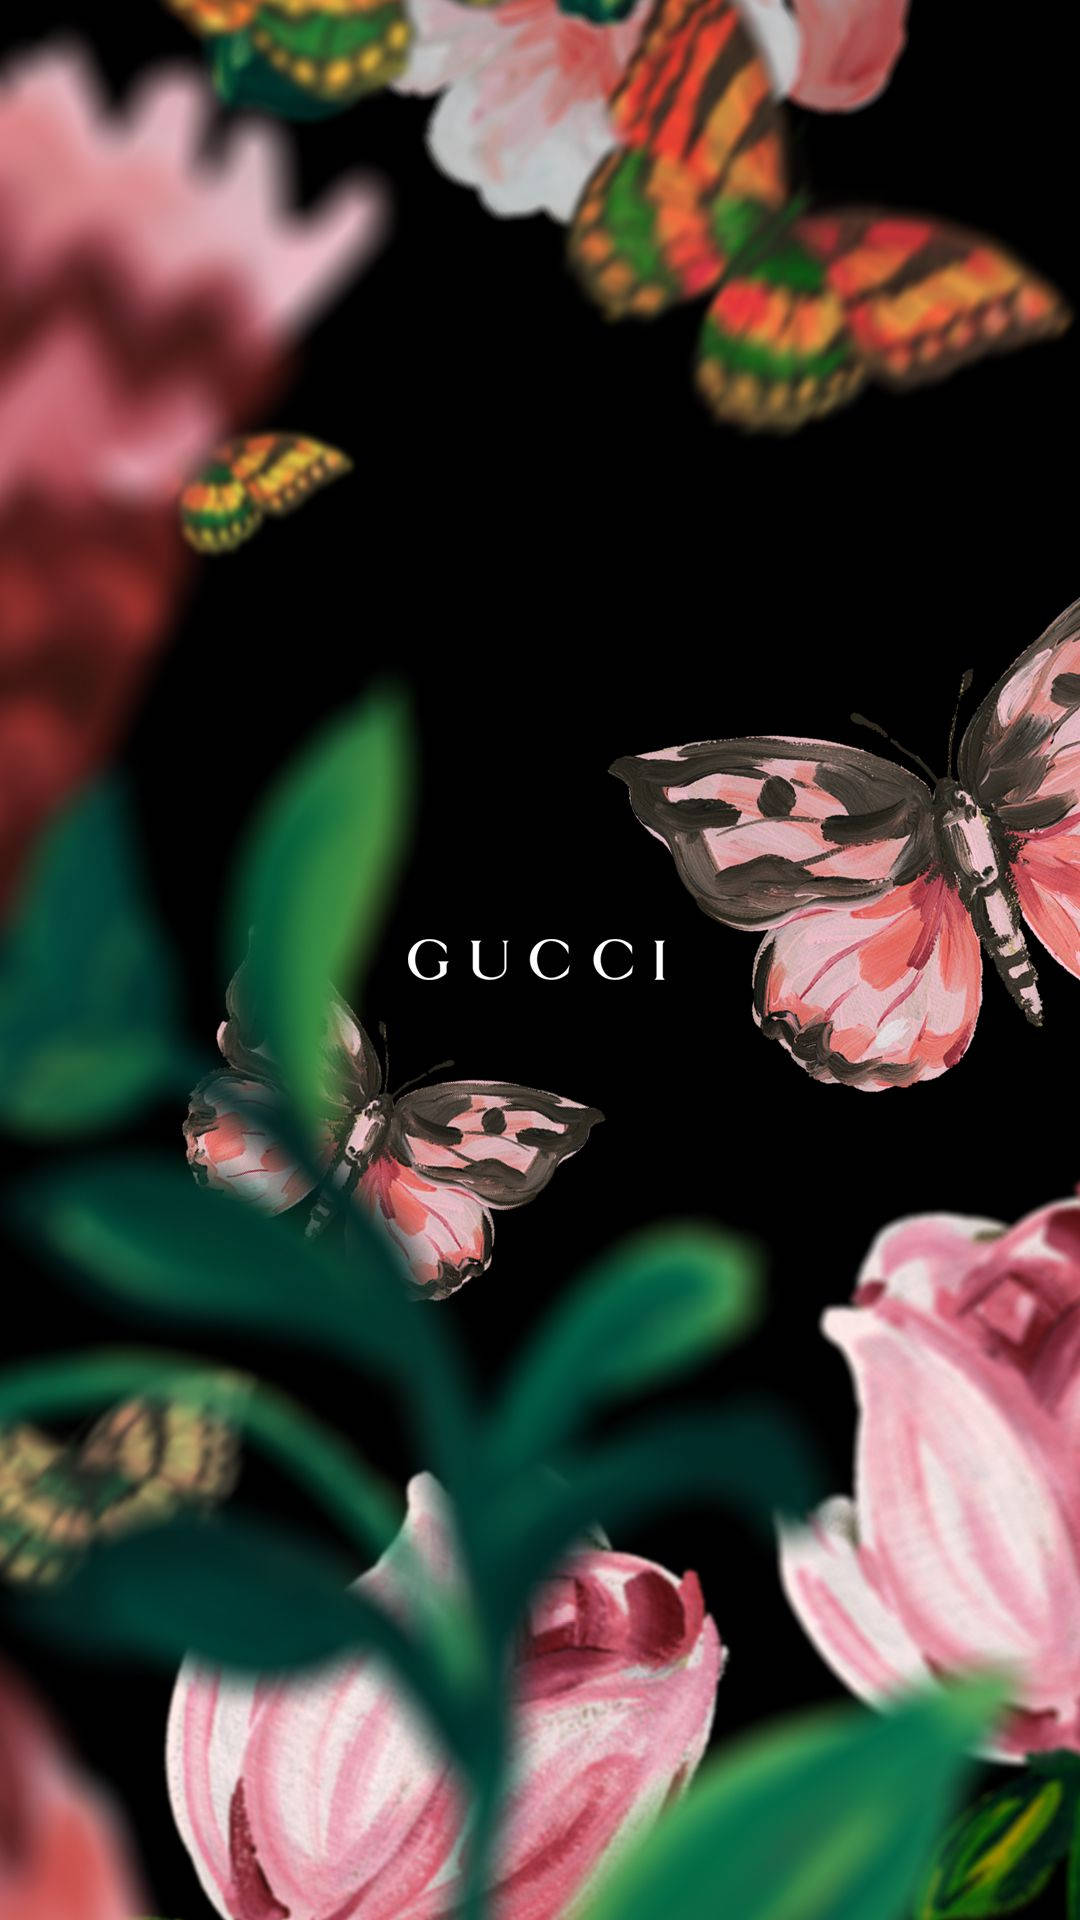 Gucci 1080X1920 wallpaper